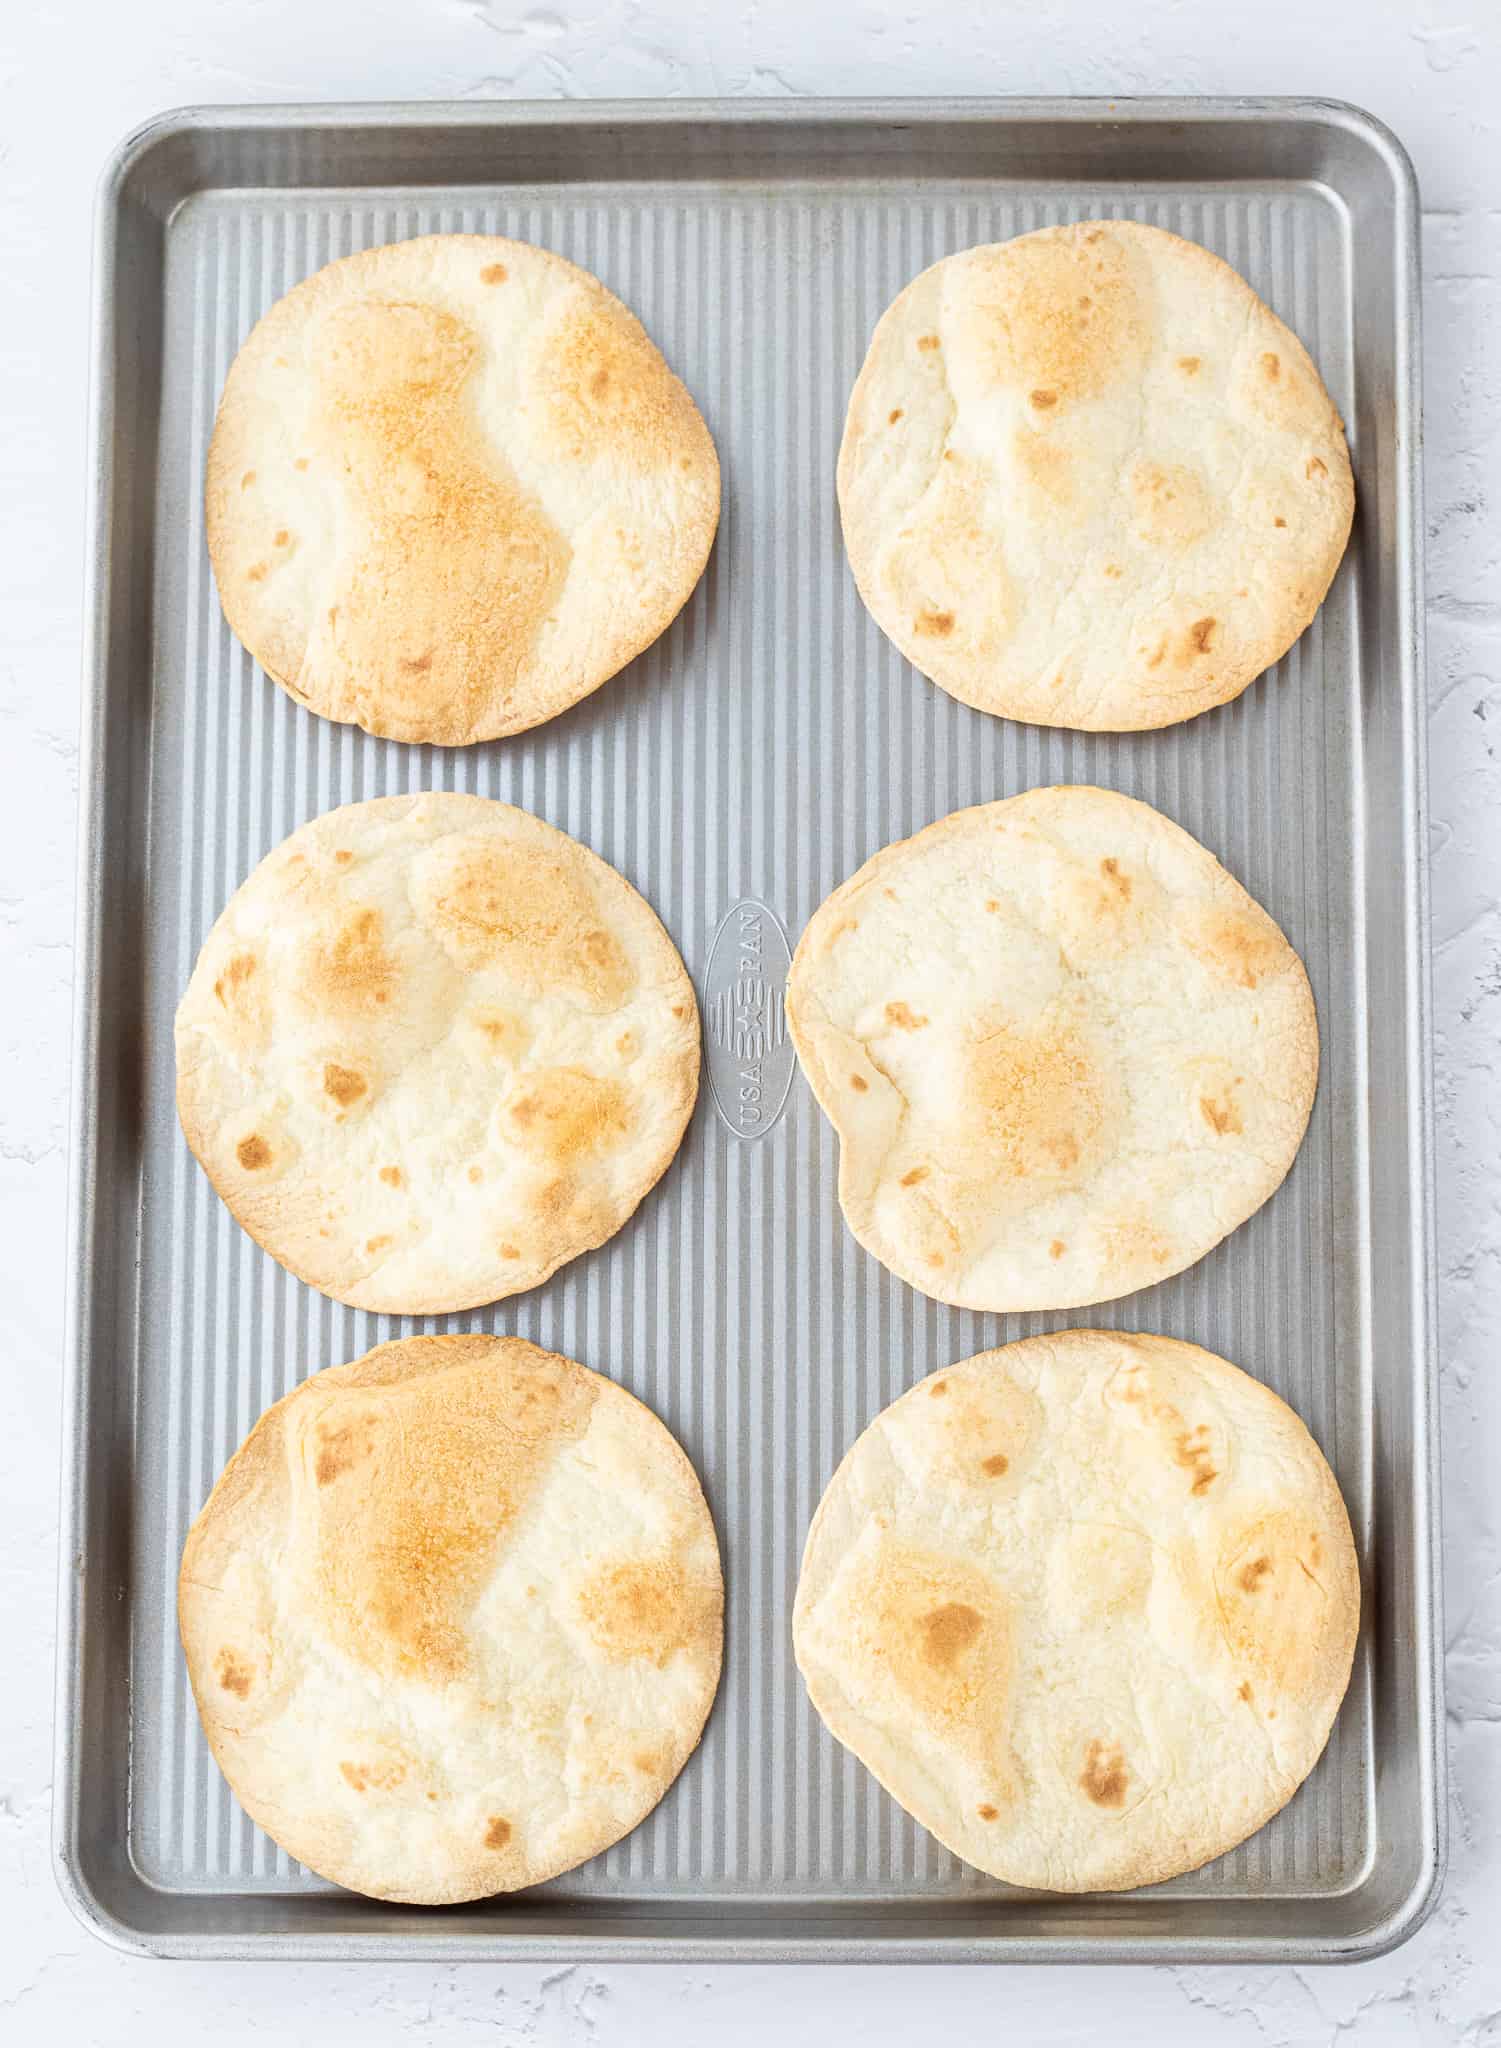 Crispy tortillas on baking sheet